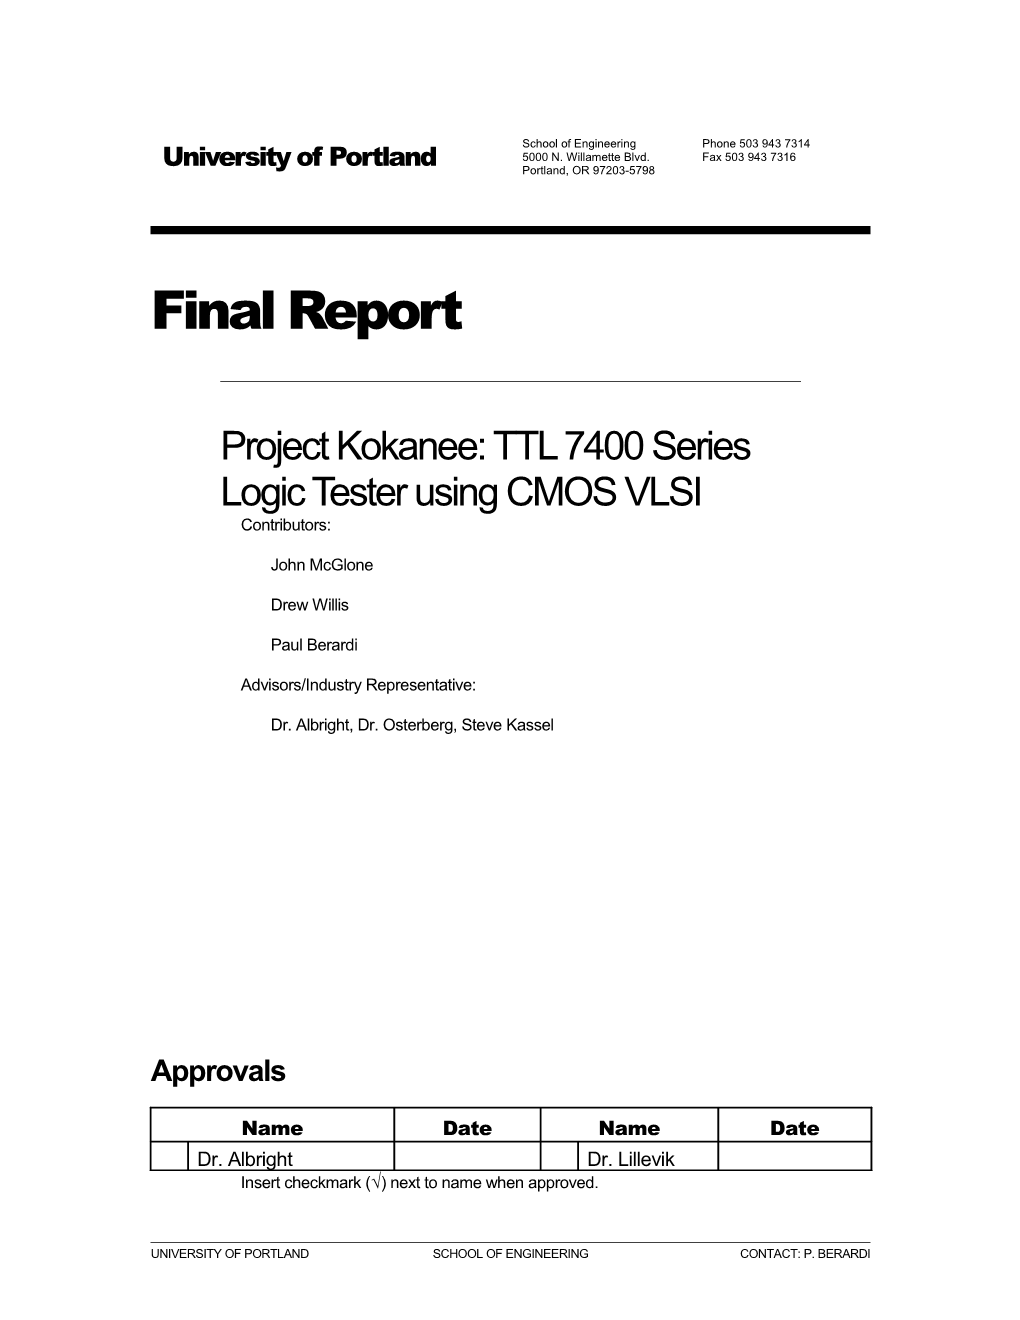 Project Kokanee: TTL 7400 Series Logic Tester Using CMOS VLSI